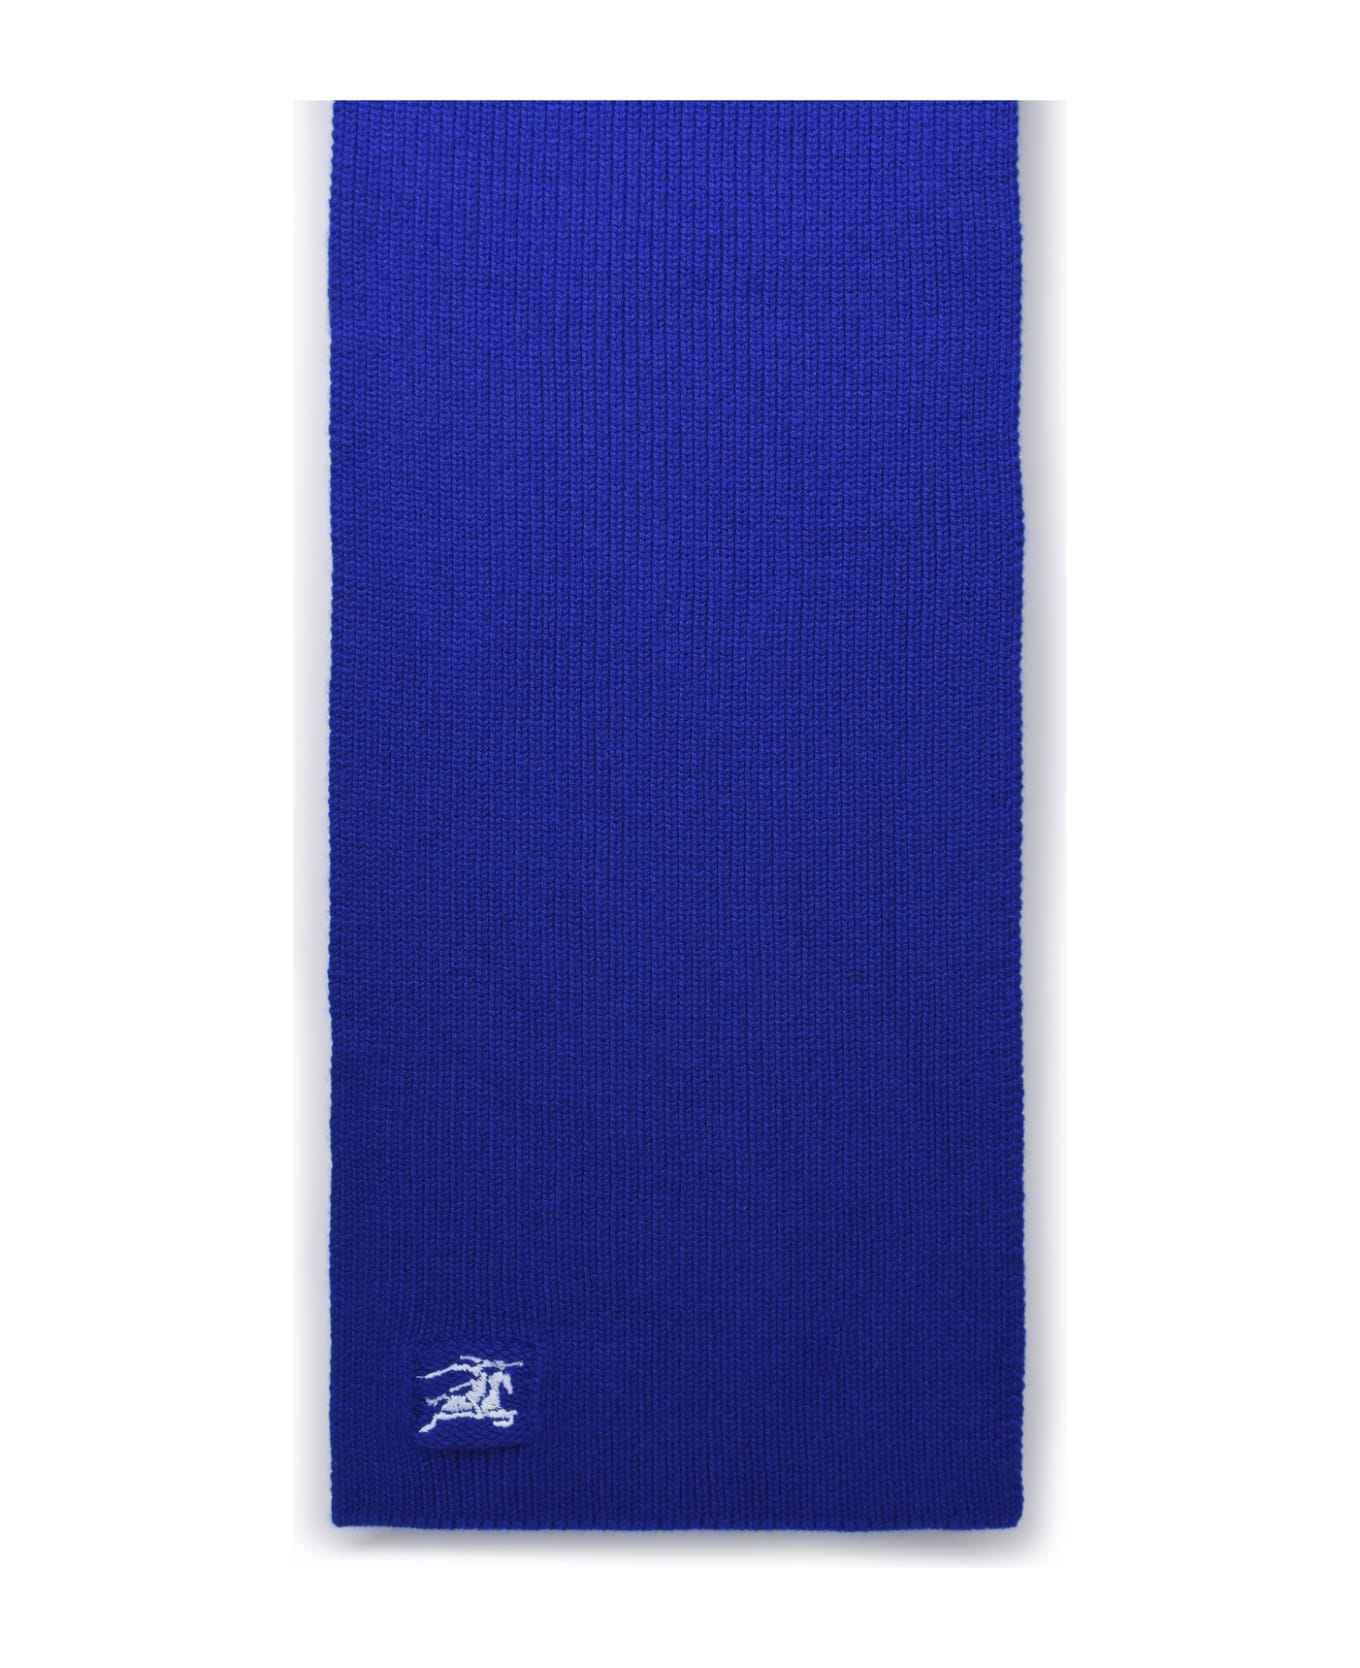 Burberry Blue Cashmere Scarf - Knight スカーフ